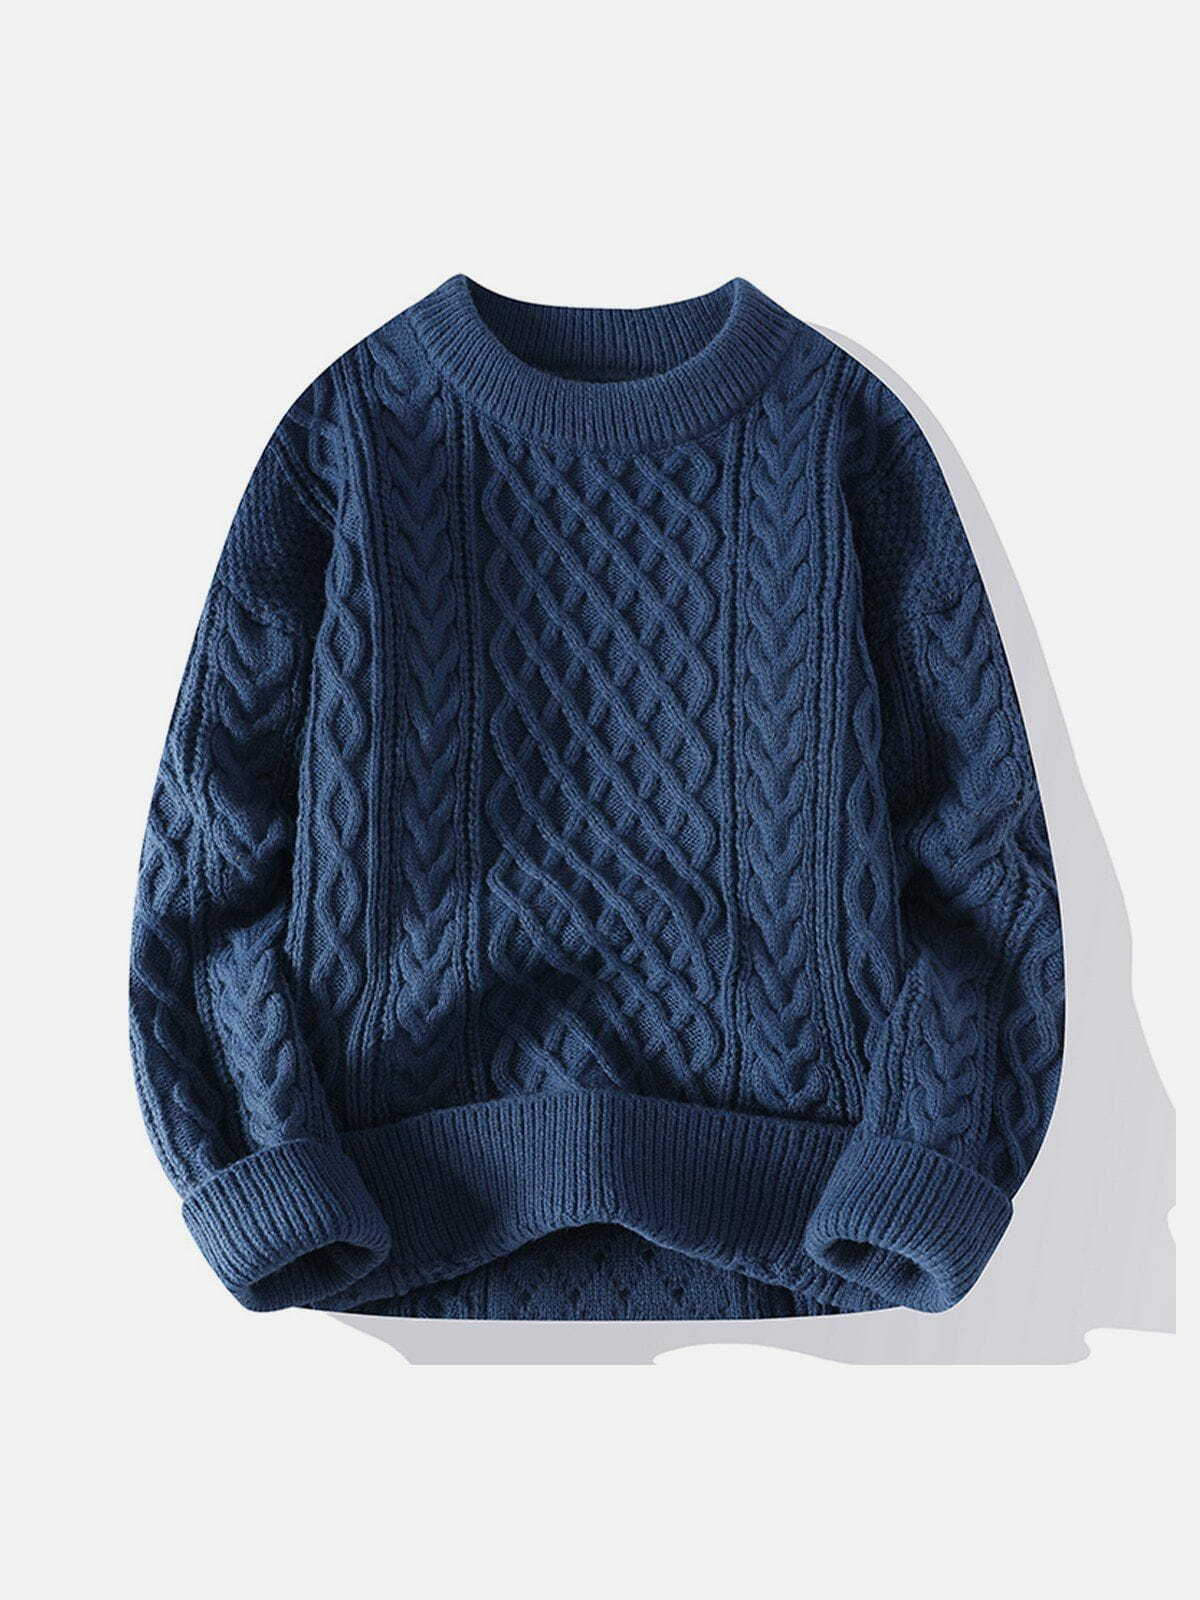 knit personality twist sweater retro & edgy streetwear 4872